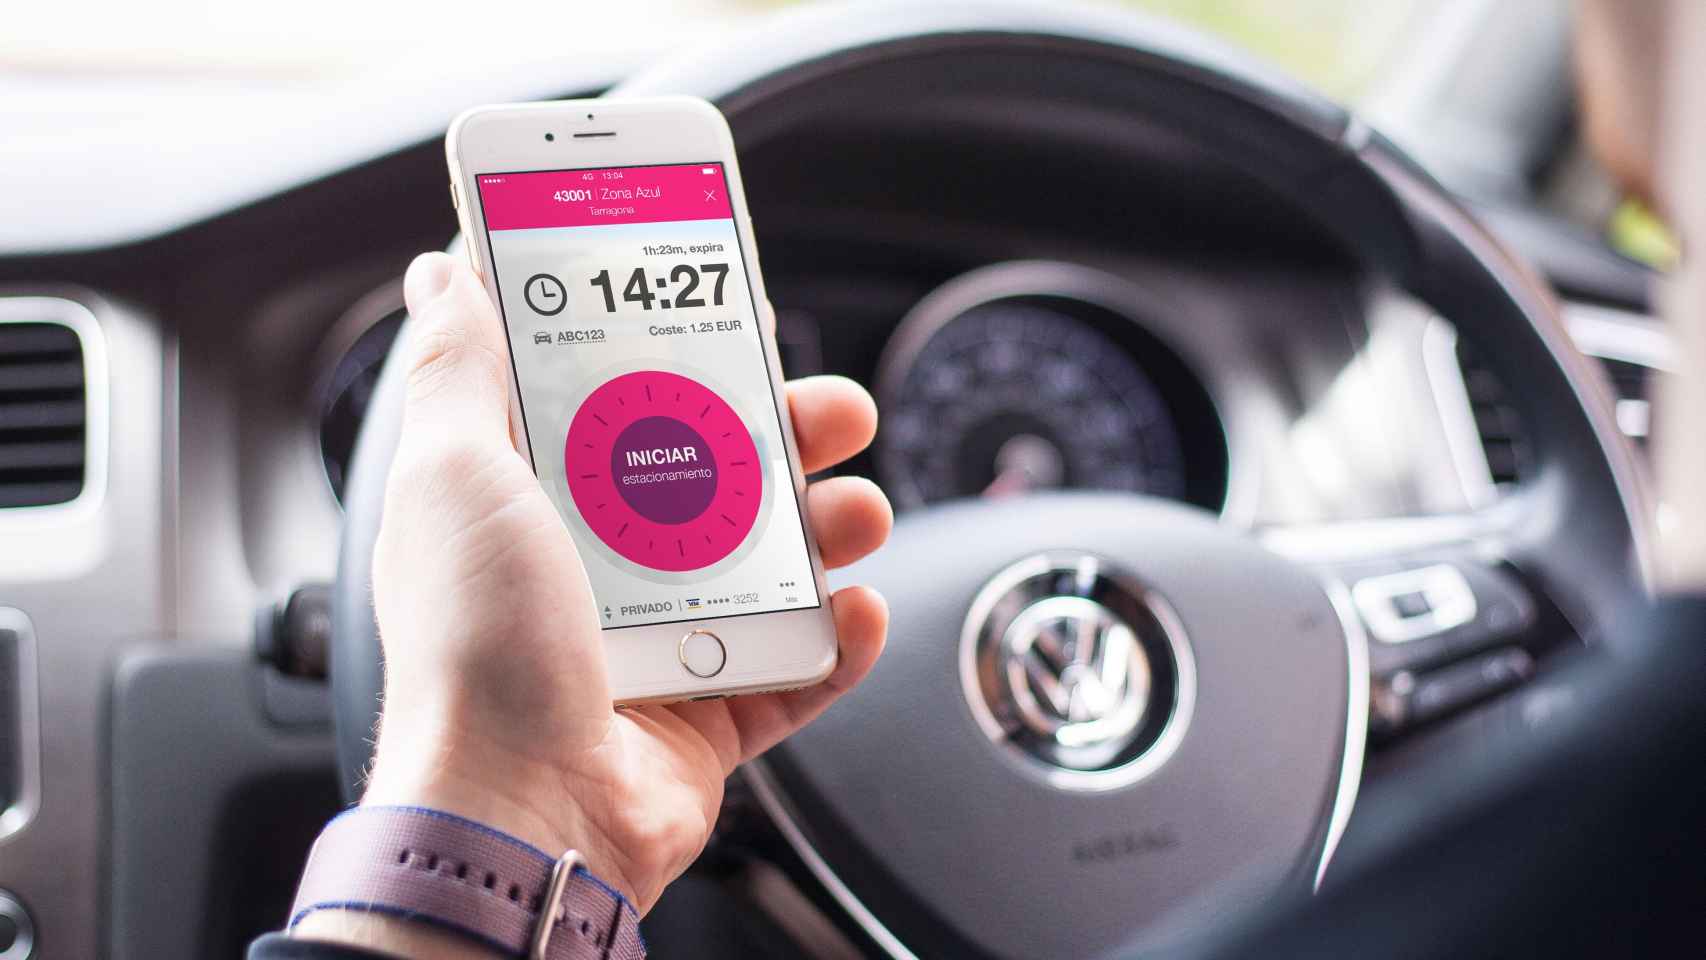 EasyPark, 'app' de parking digital que opera en Barcelona